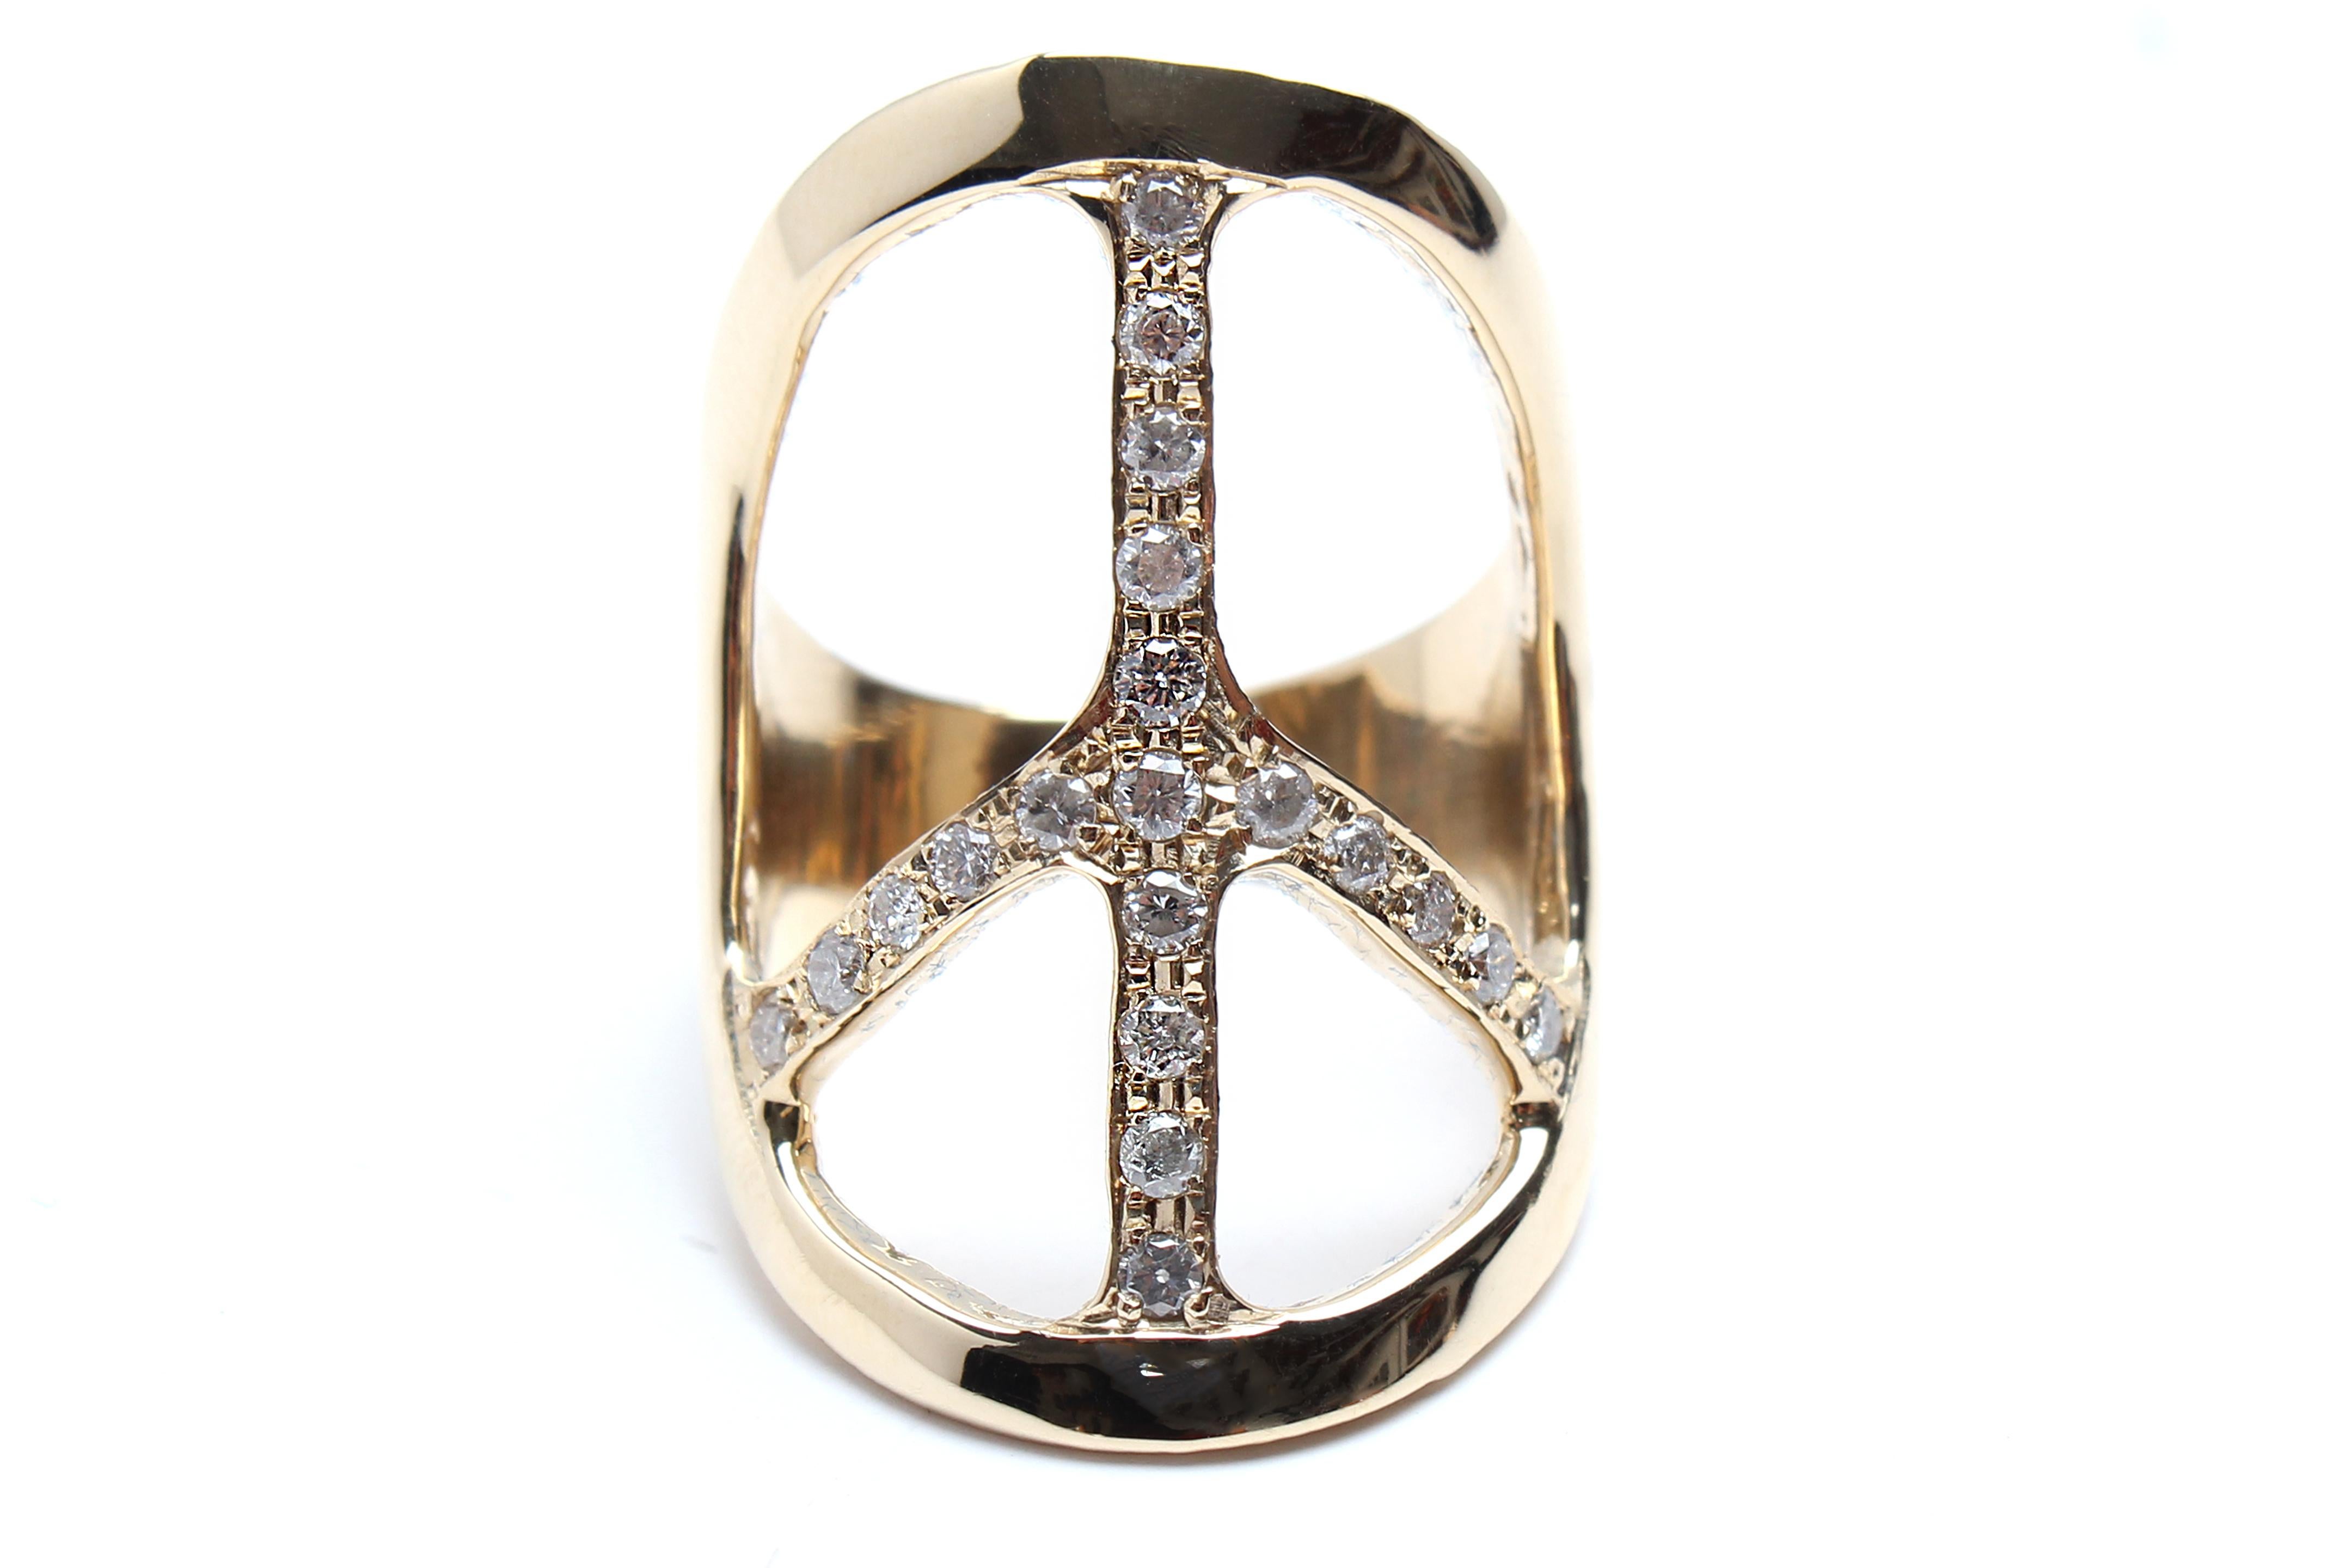 Clarissa Bronfman Signature Solid 14 Karat Gold Diamond Peace Ring For Sale